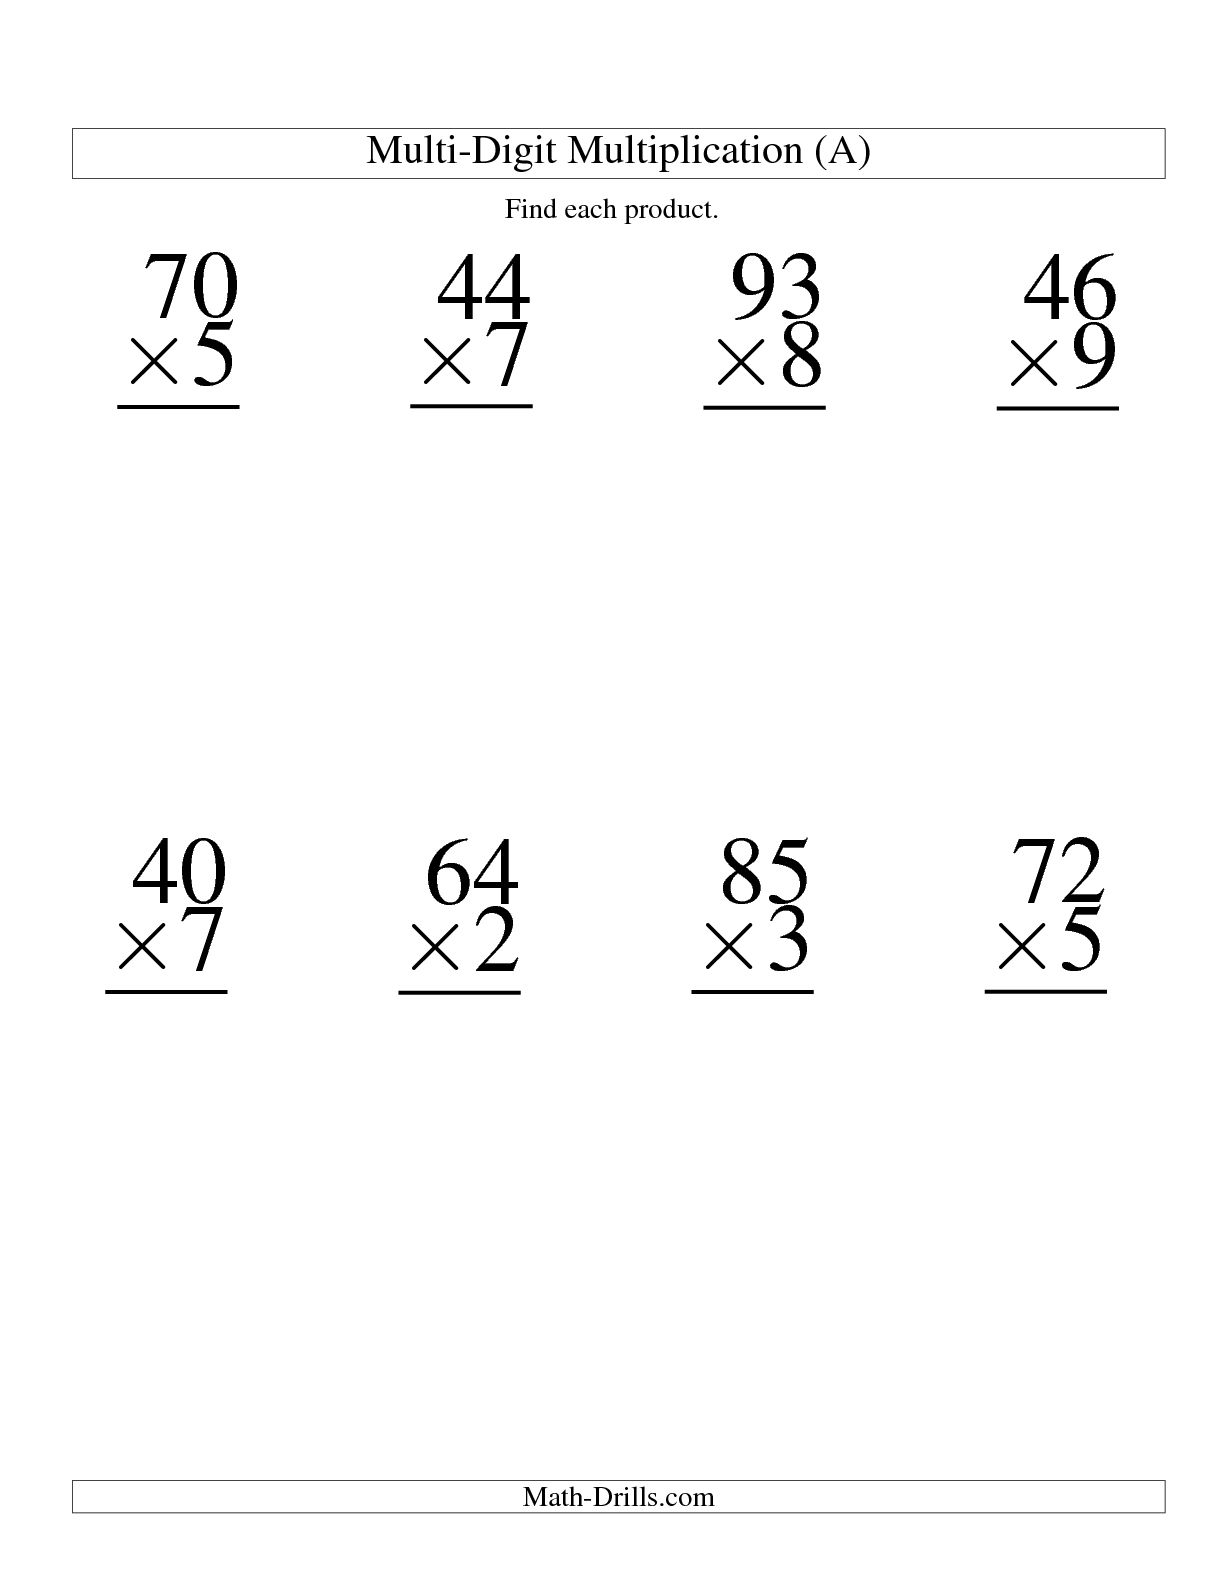 Double-Digit Multiplication Worksheets Image